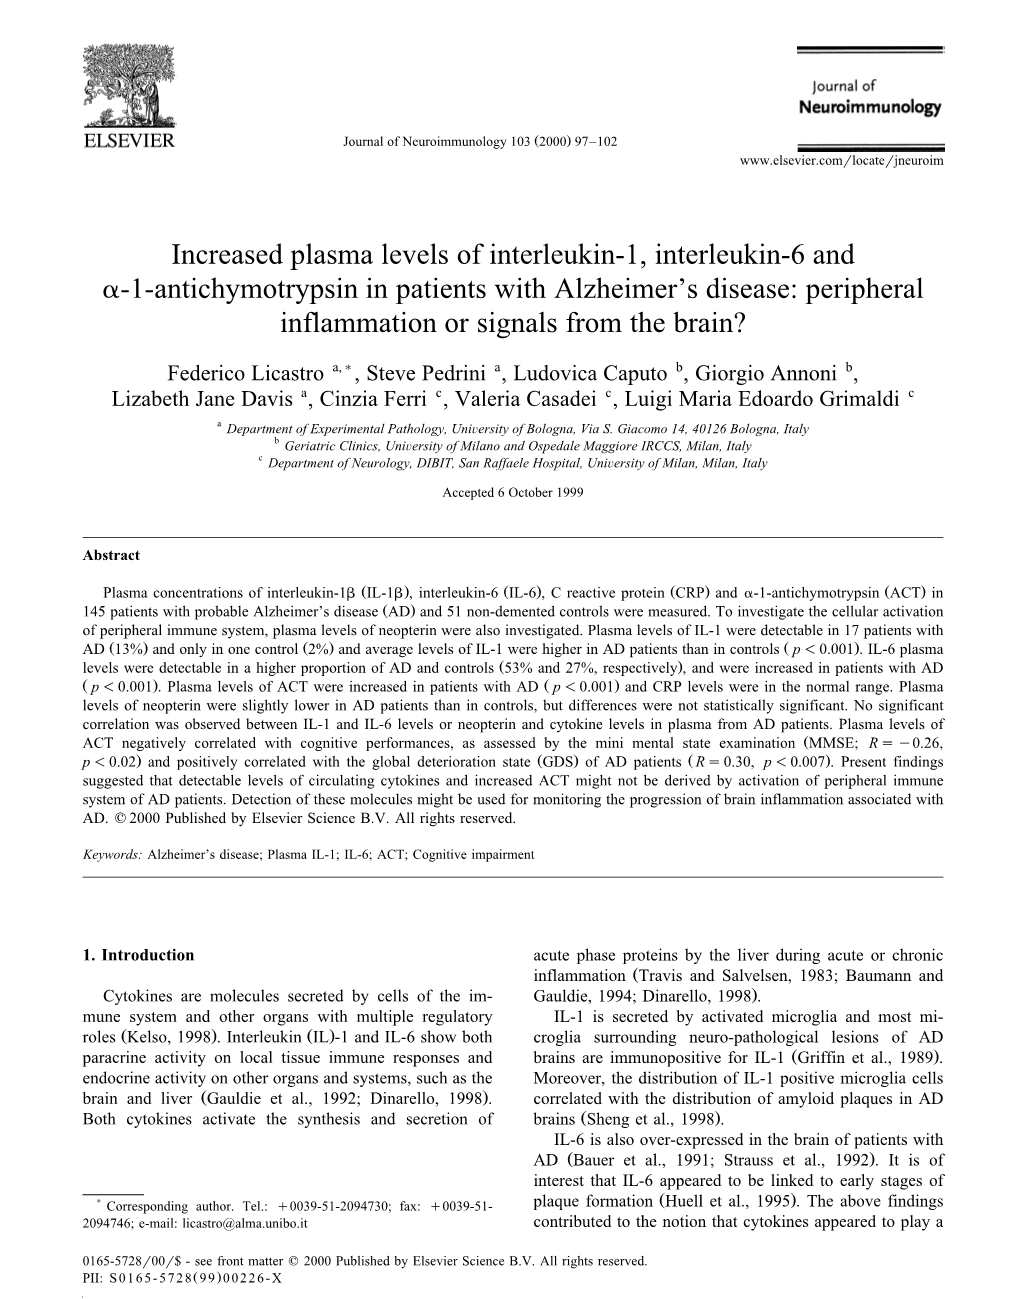 Increased Plasma Levels of Interleukin-1, Interleukin-6 and Α-1